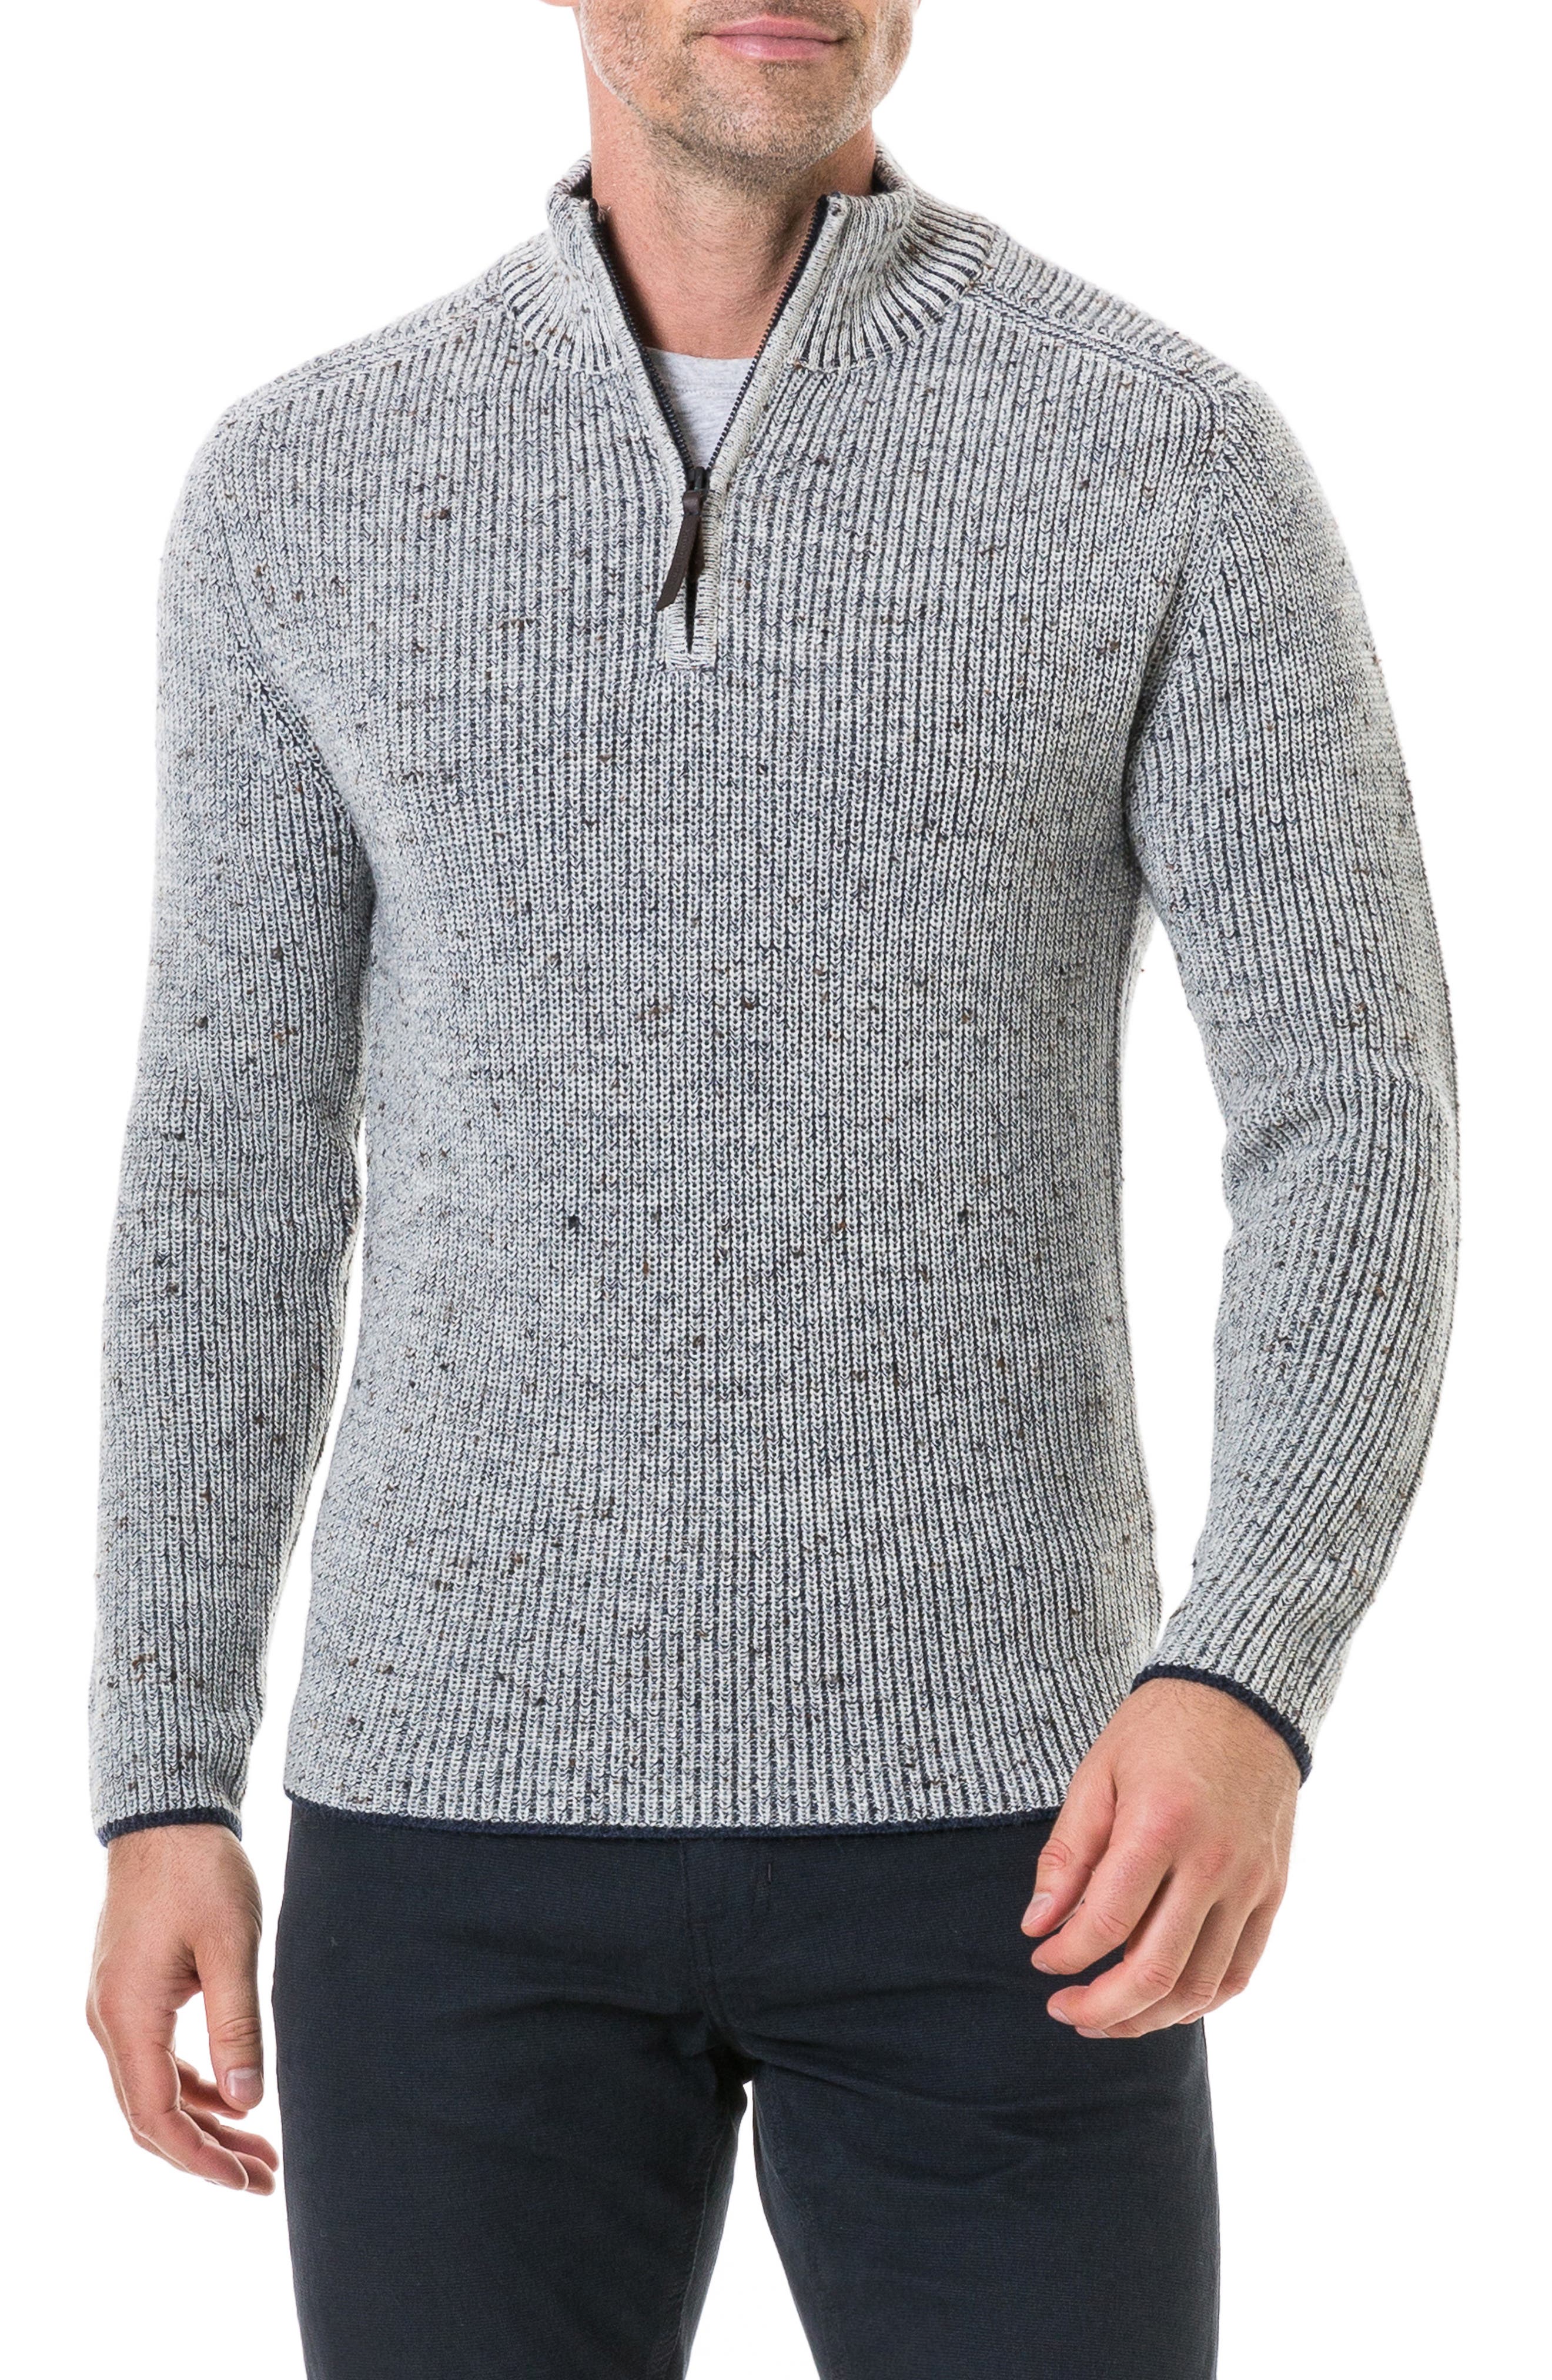 RDHOPE-Men Casual Turtleneck Skinny Comfy Long-Sleeve Pullover Sweater 